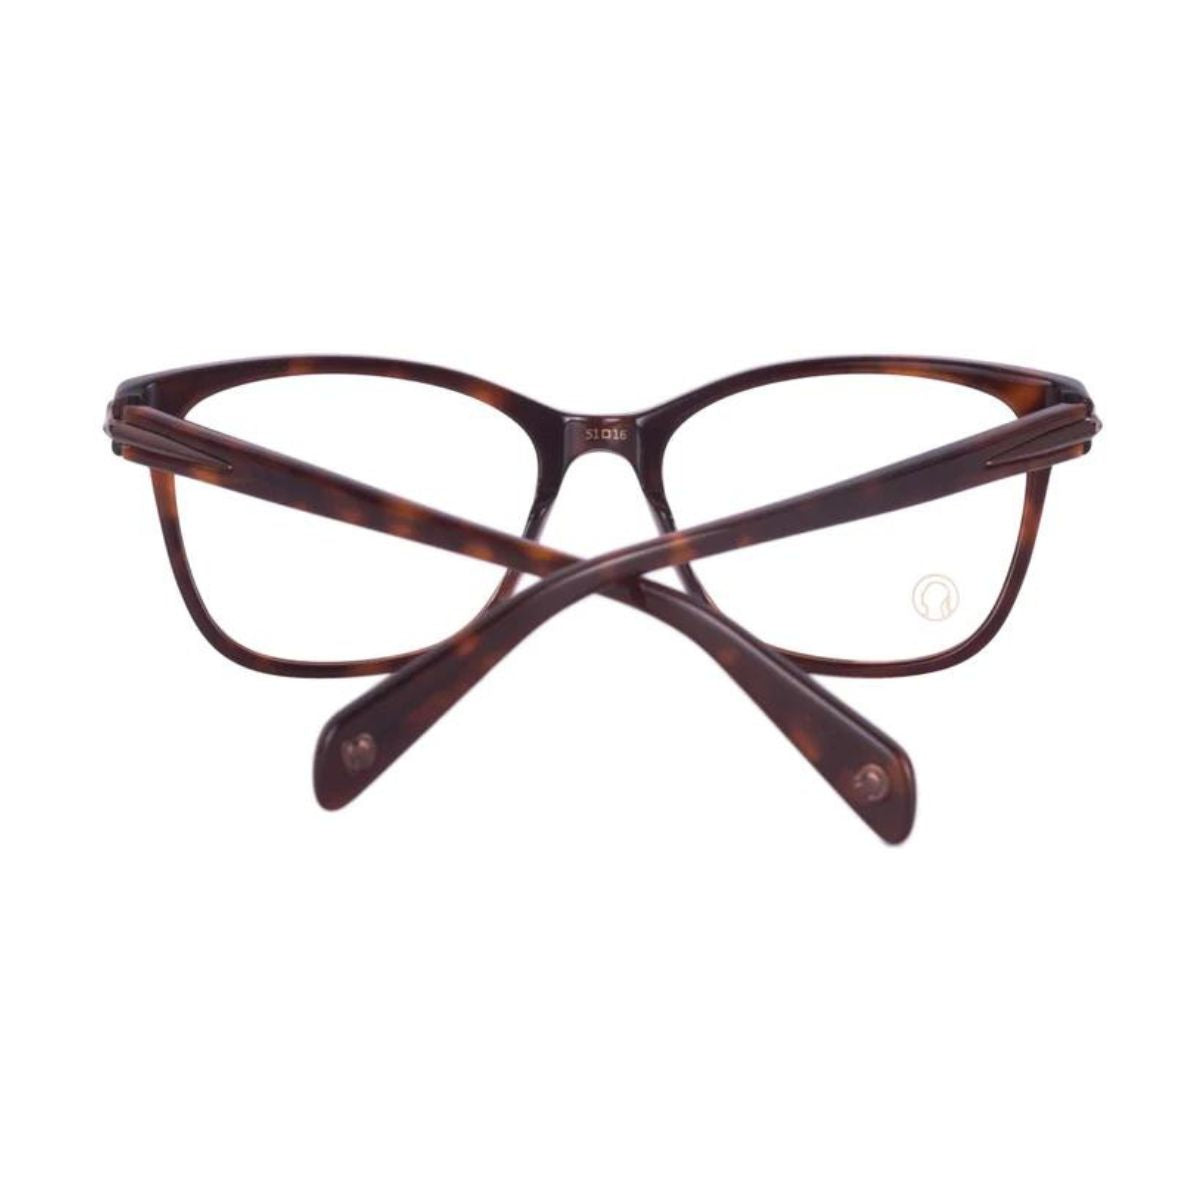 "best The Monk Florence C2 optical eyewear frame for women's online at optorium"